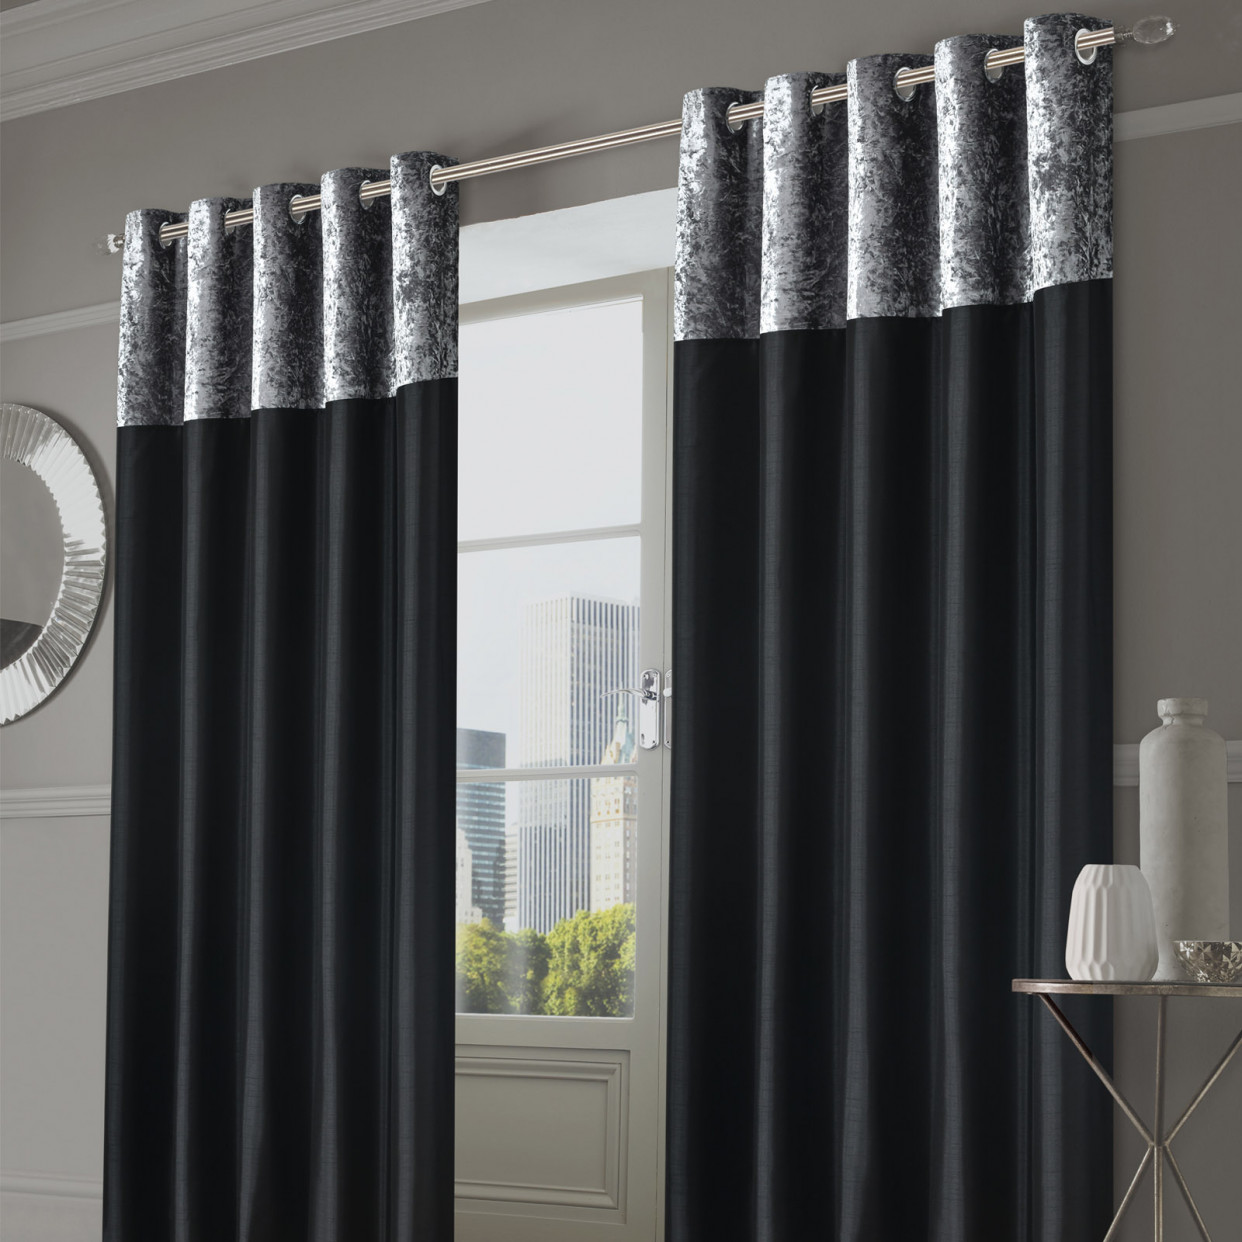 Sienna Home Manhattan Crushed Velvet Band Eyelet Curtains - Black, 46" x 72">